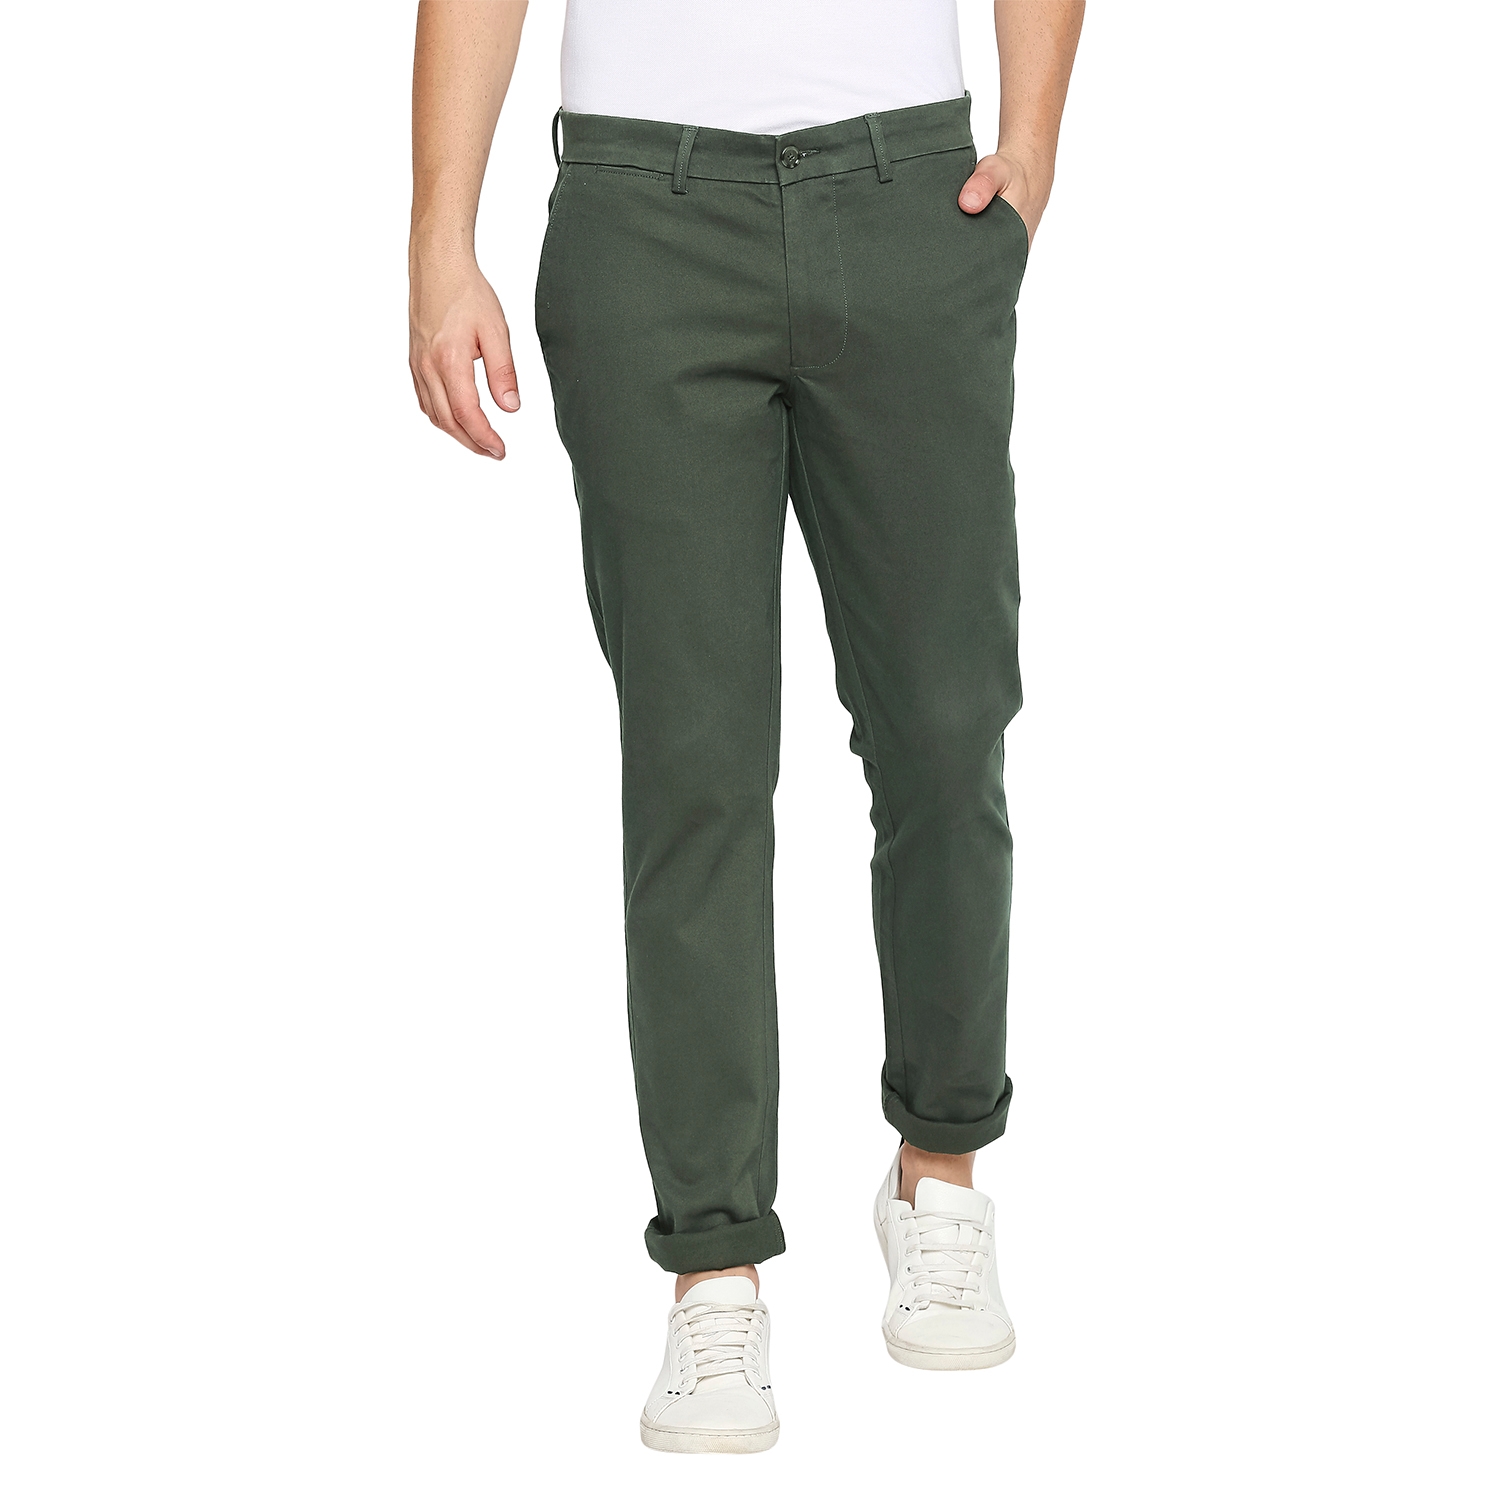 Basics | Basics Tapered Fit Rosin Olive Stretch Trousers